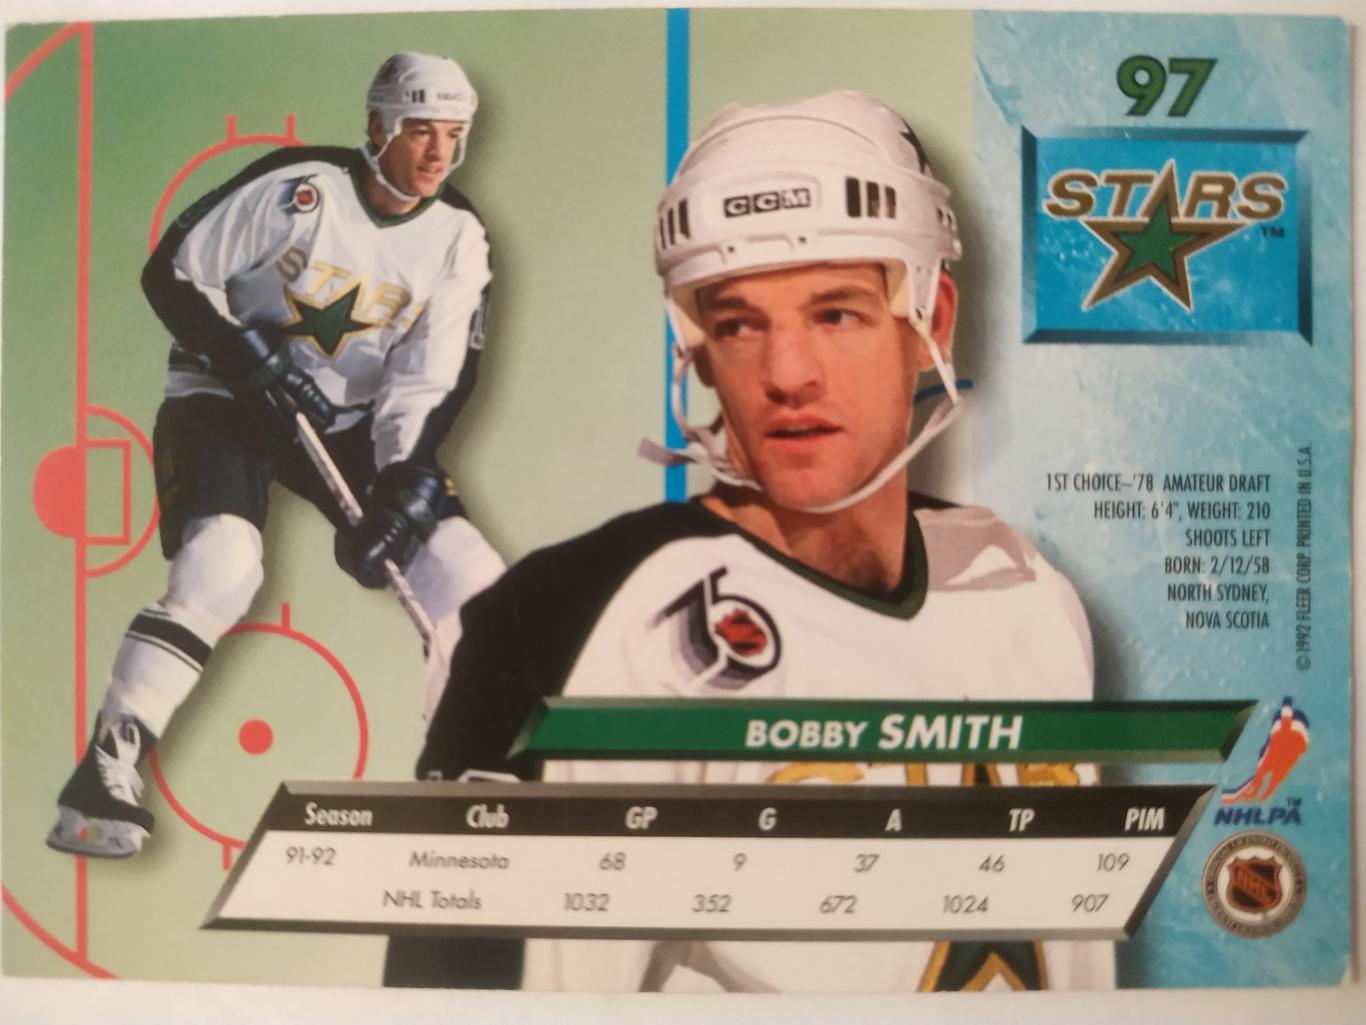 ХОККЕЙ КАРТОЧКА НХЛ FLEER ULTRA 1992-93 NHL BOBBY SMITH MINNESOTA NORTH STAR #97 1